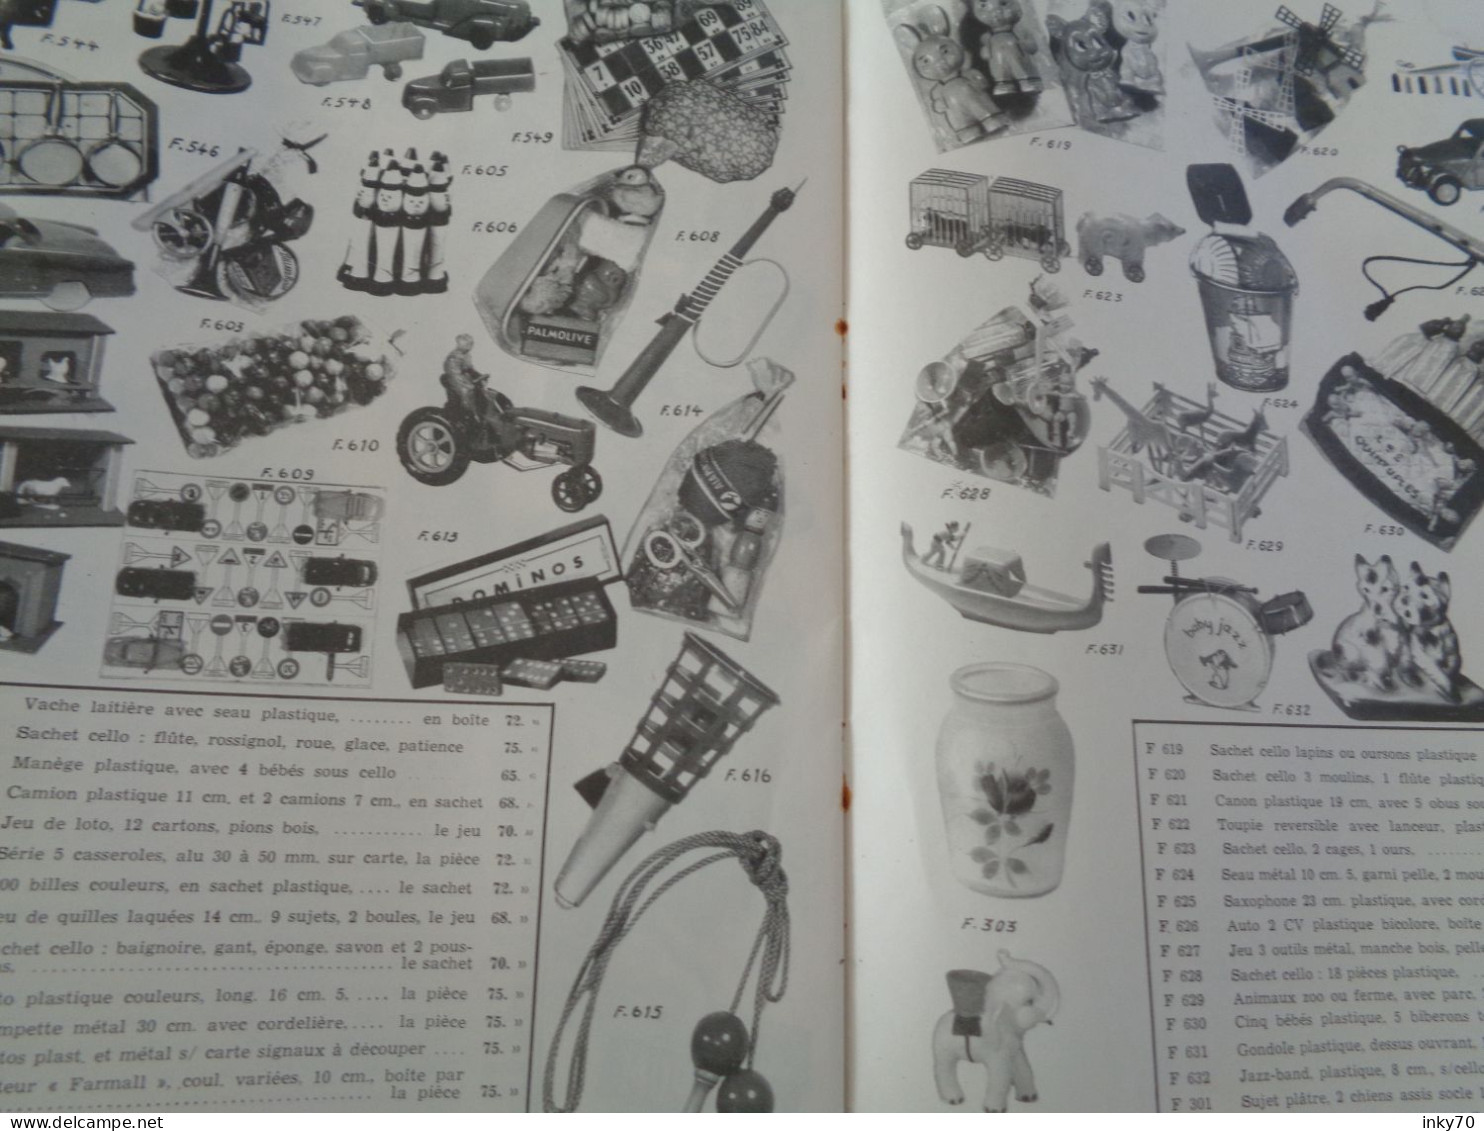 (jouets) Paris Catalogue COMPTOIR GENERAL DE LA BIMBELOTERIE 1954 - Advertising